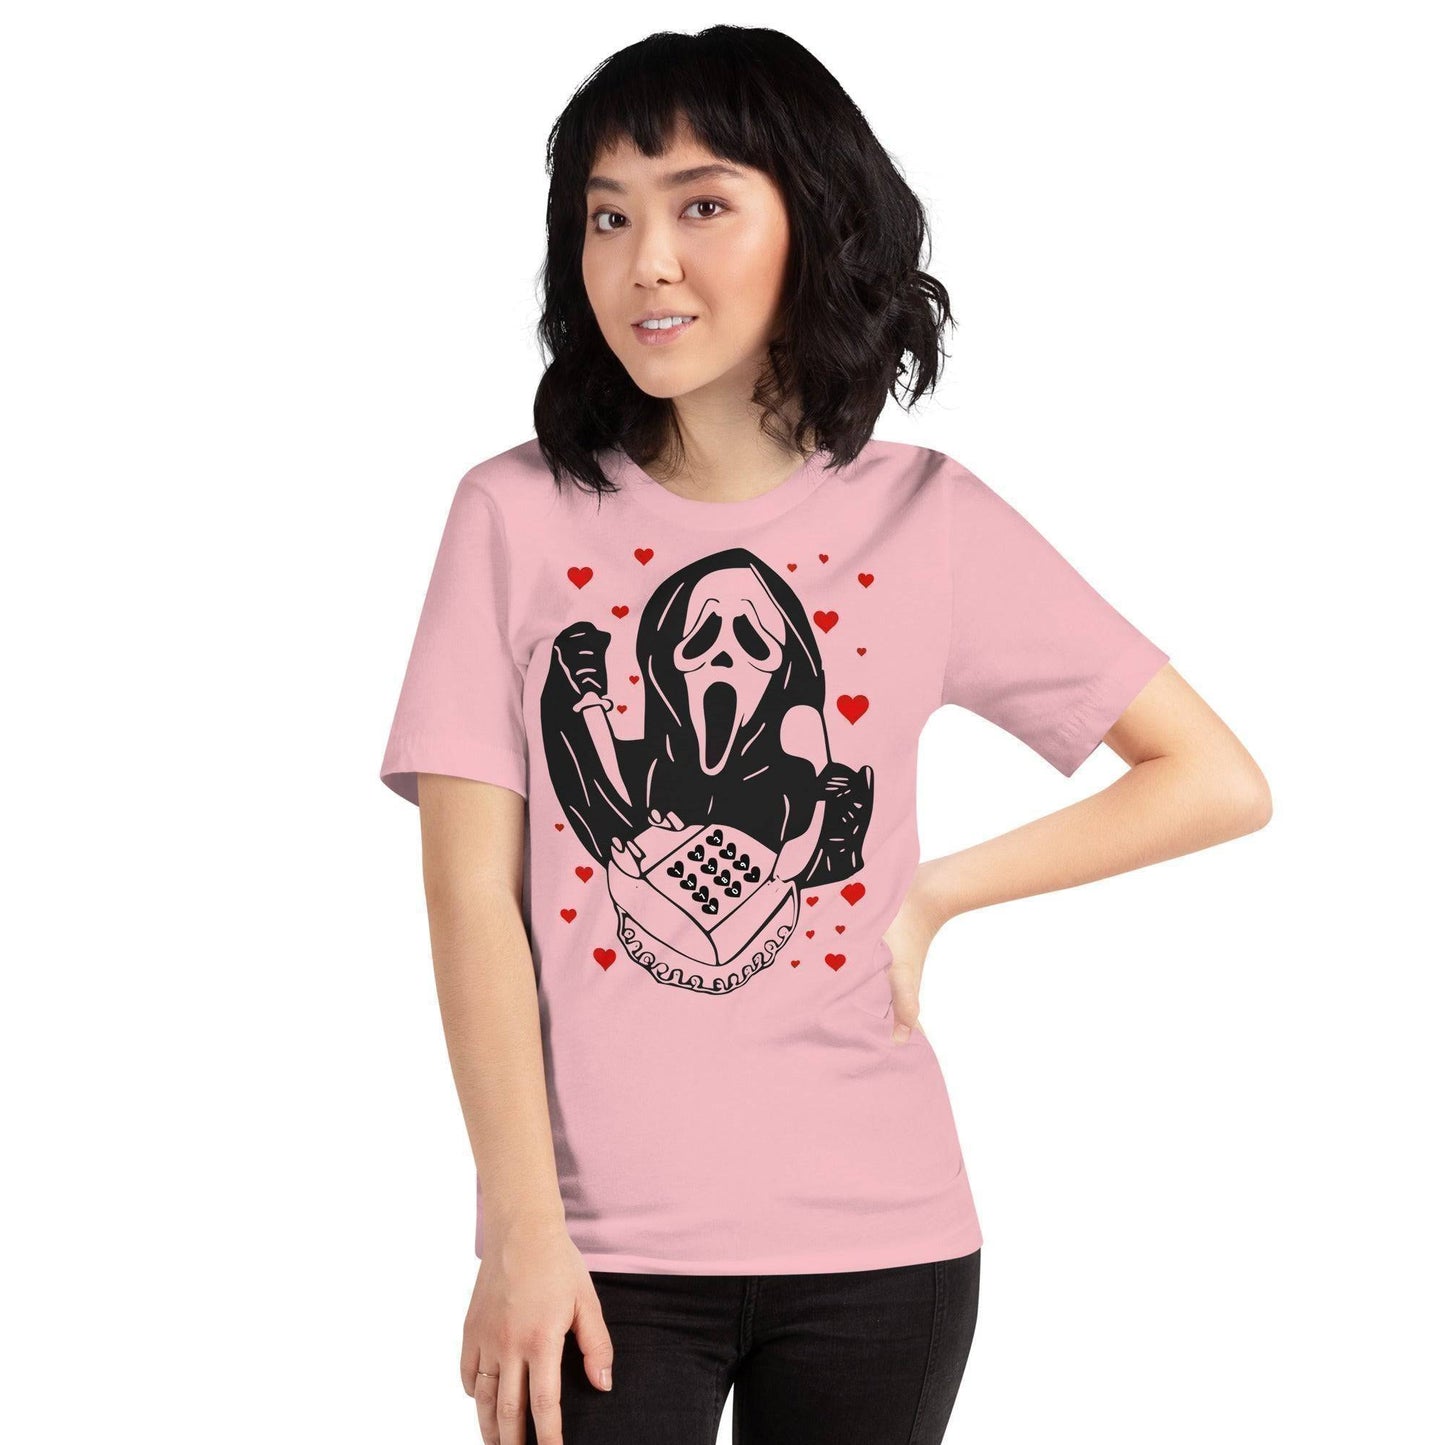 Call Me, Maybe? Scream T-Shirt Pink